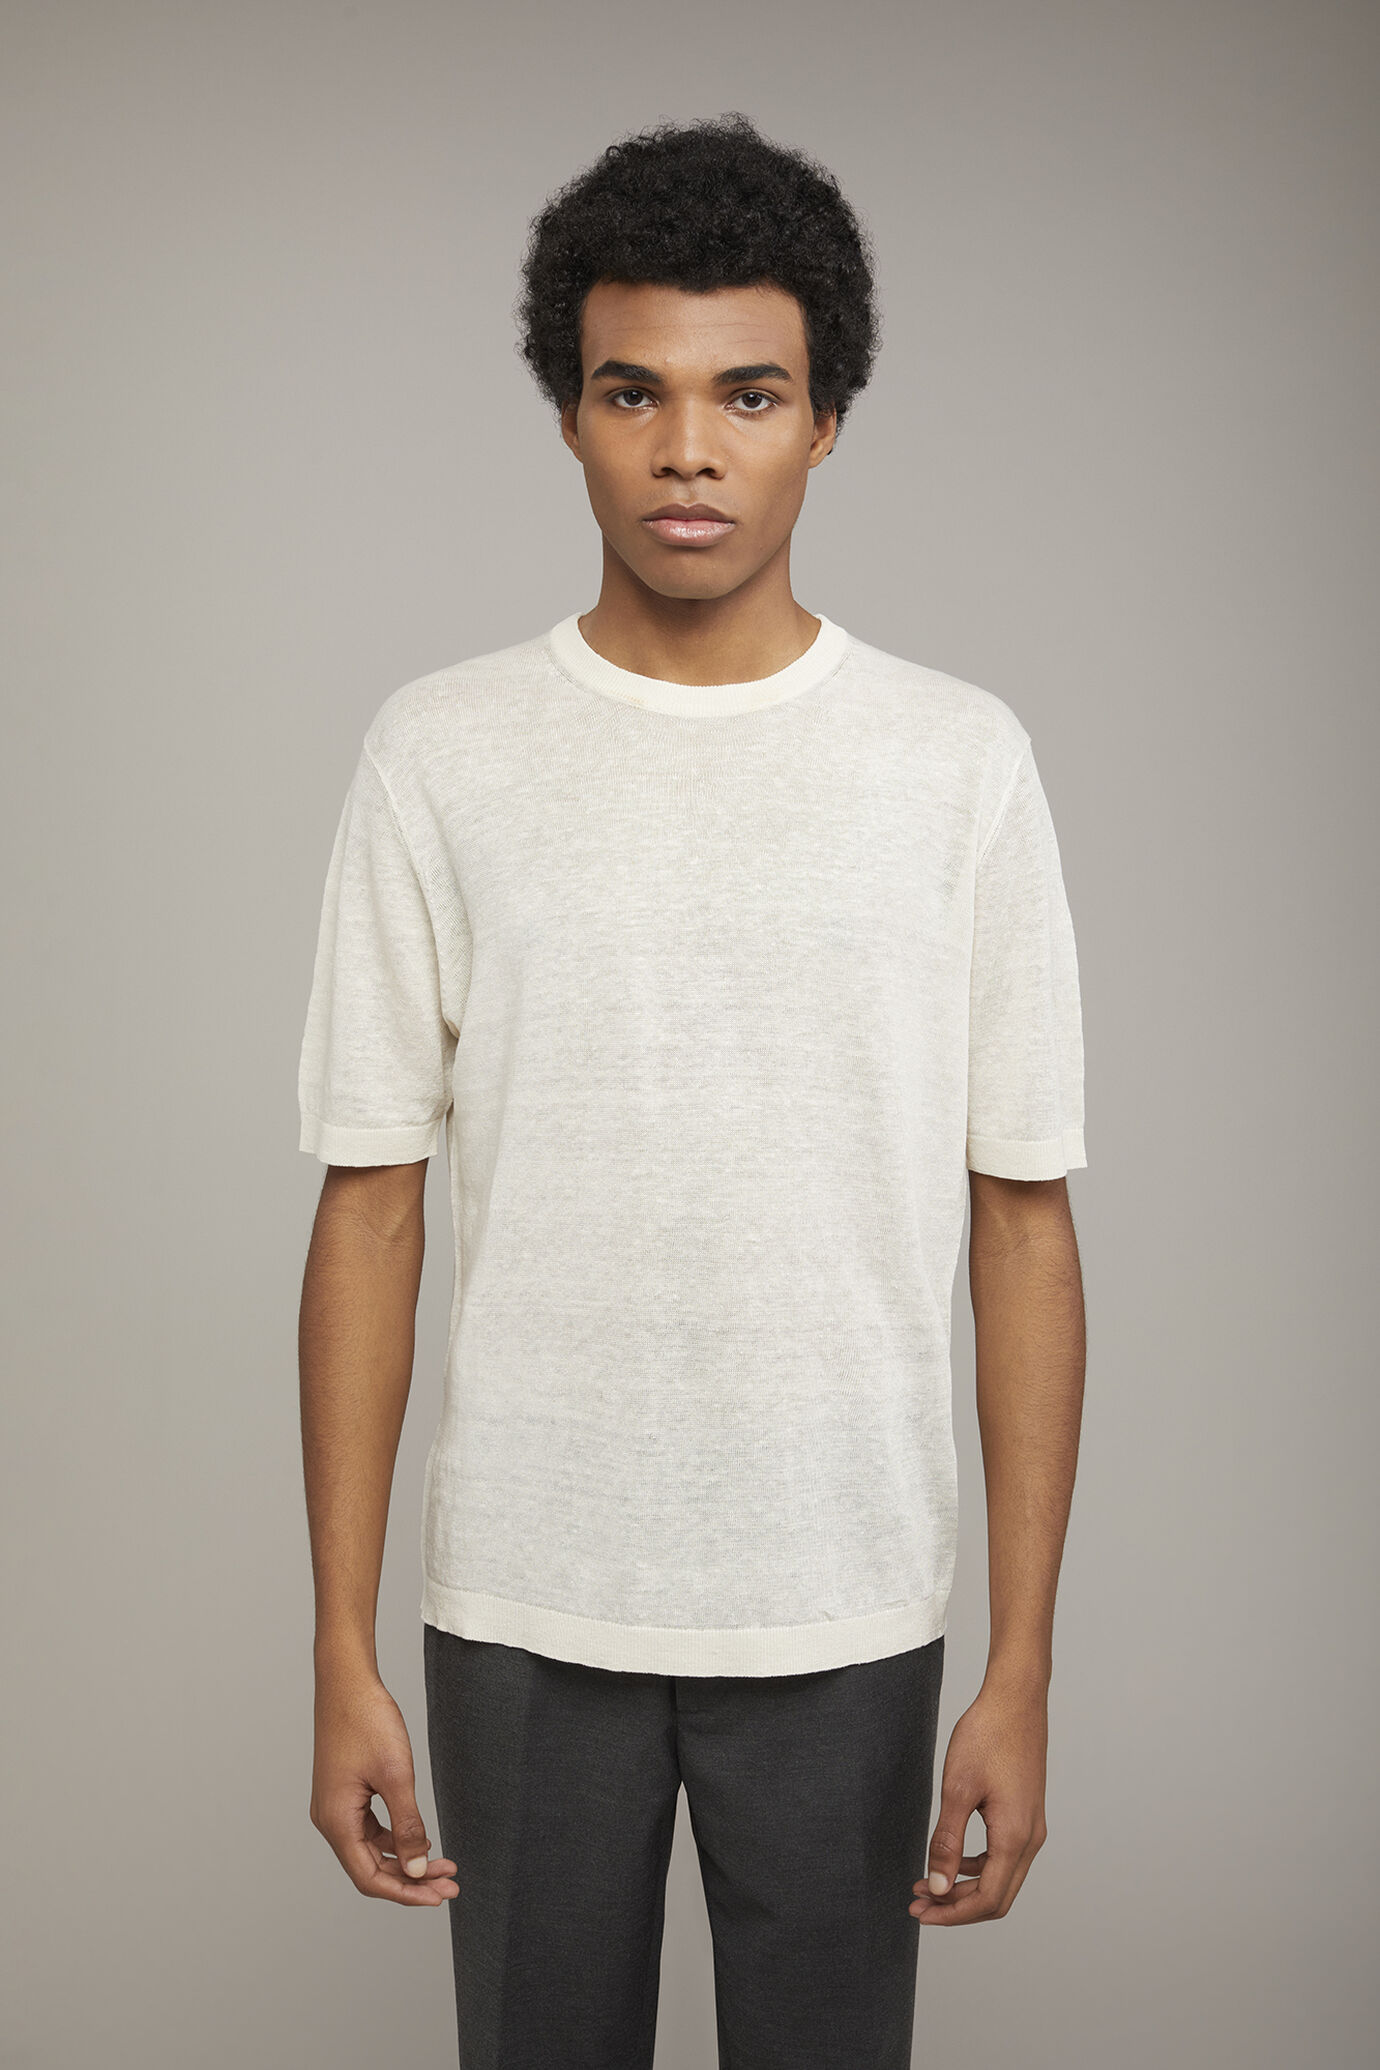 Men's knitted t-shirt 100% linen short-sleeved regular fit